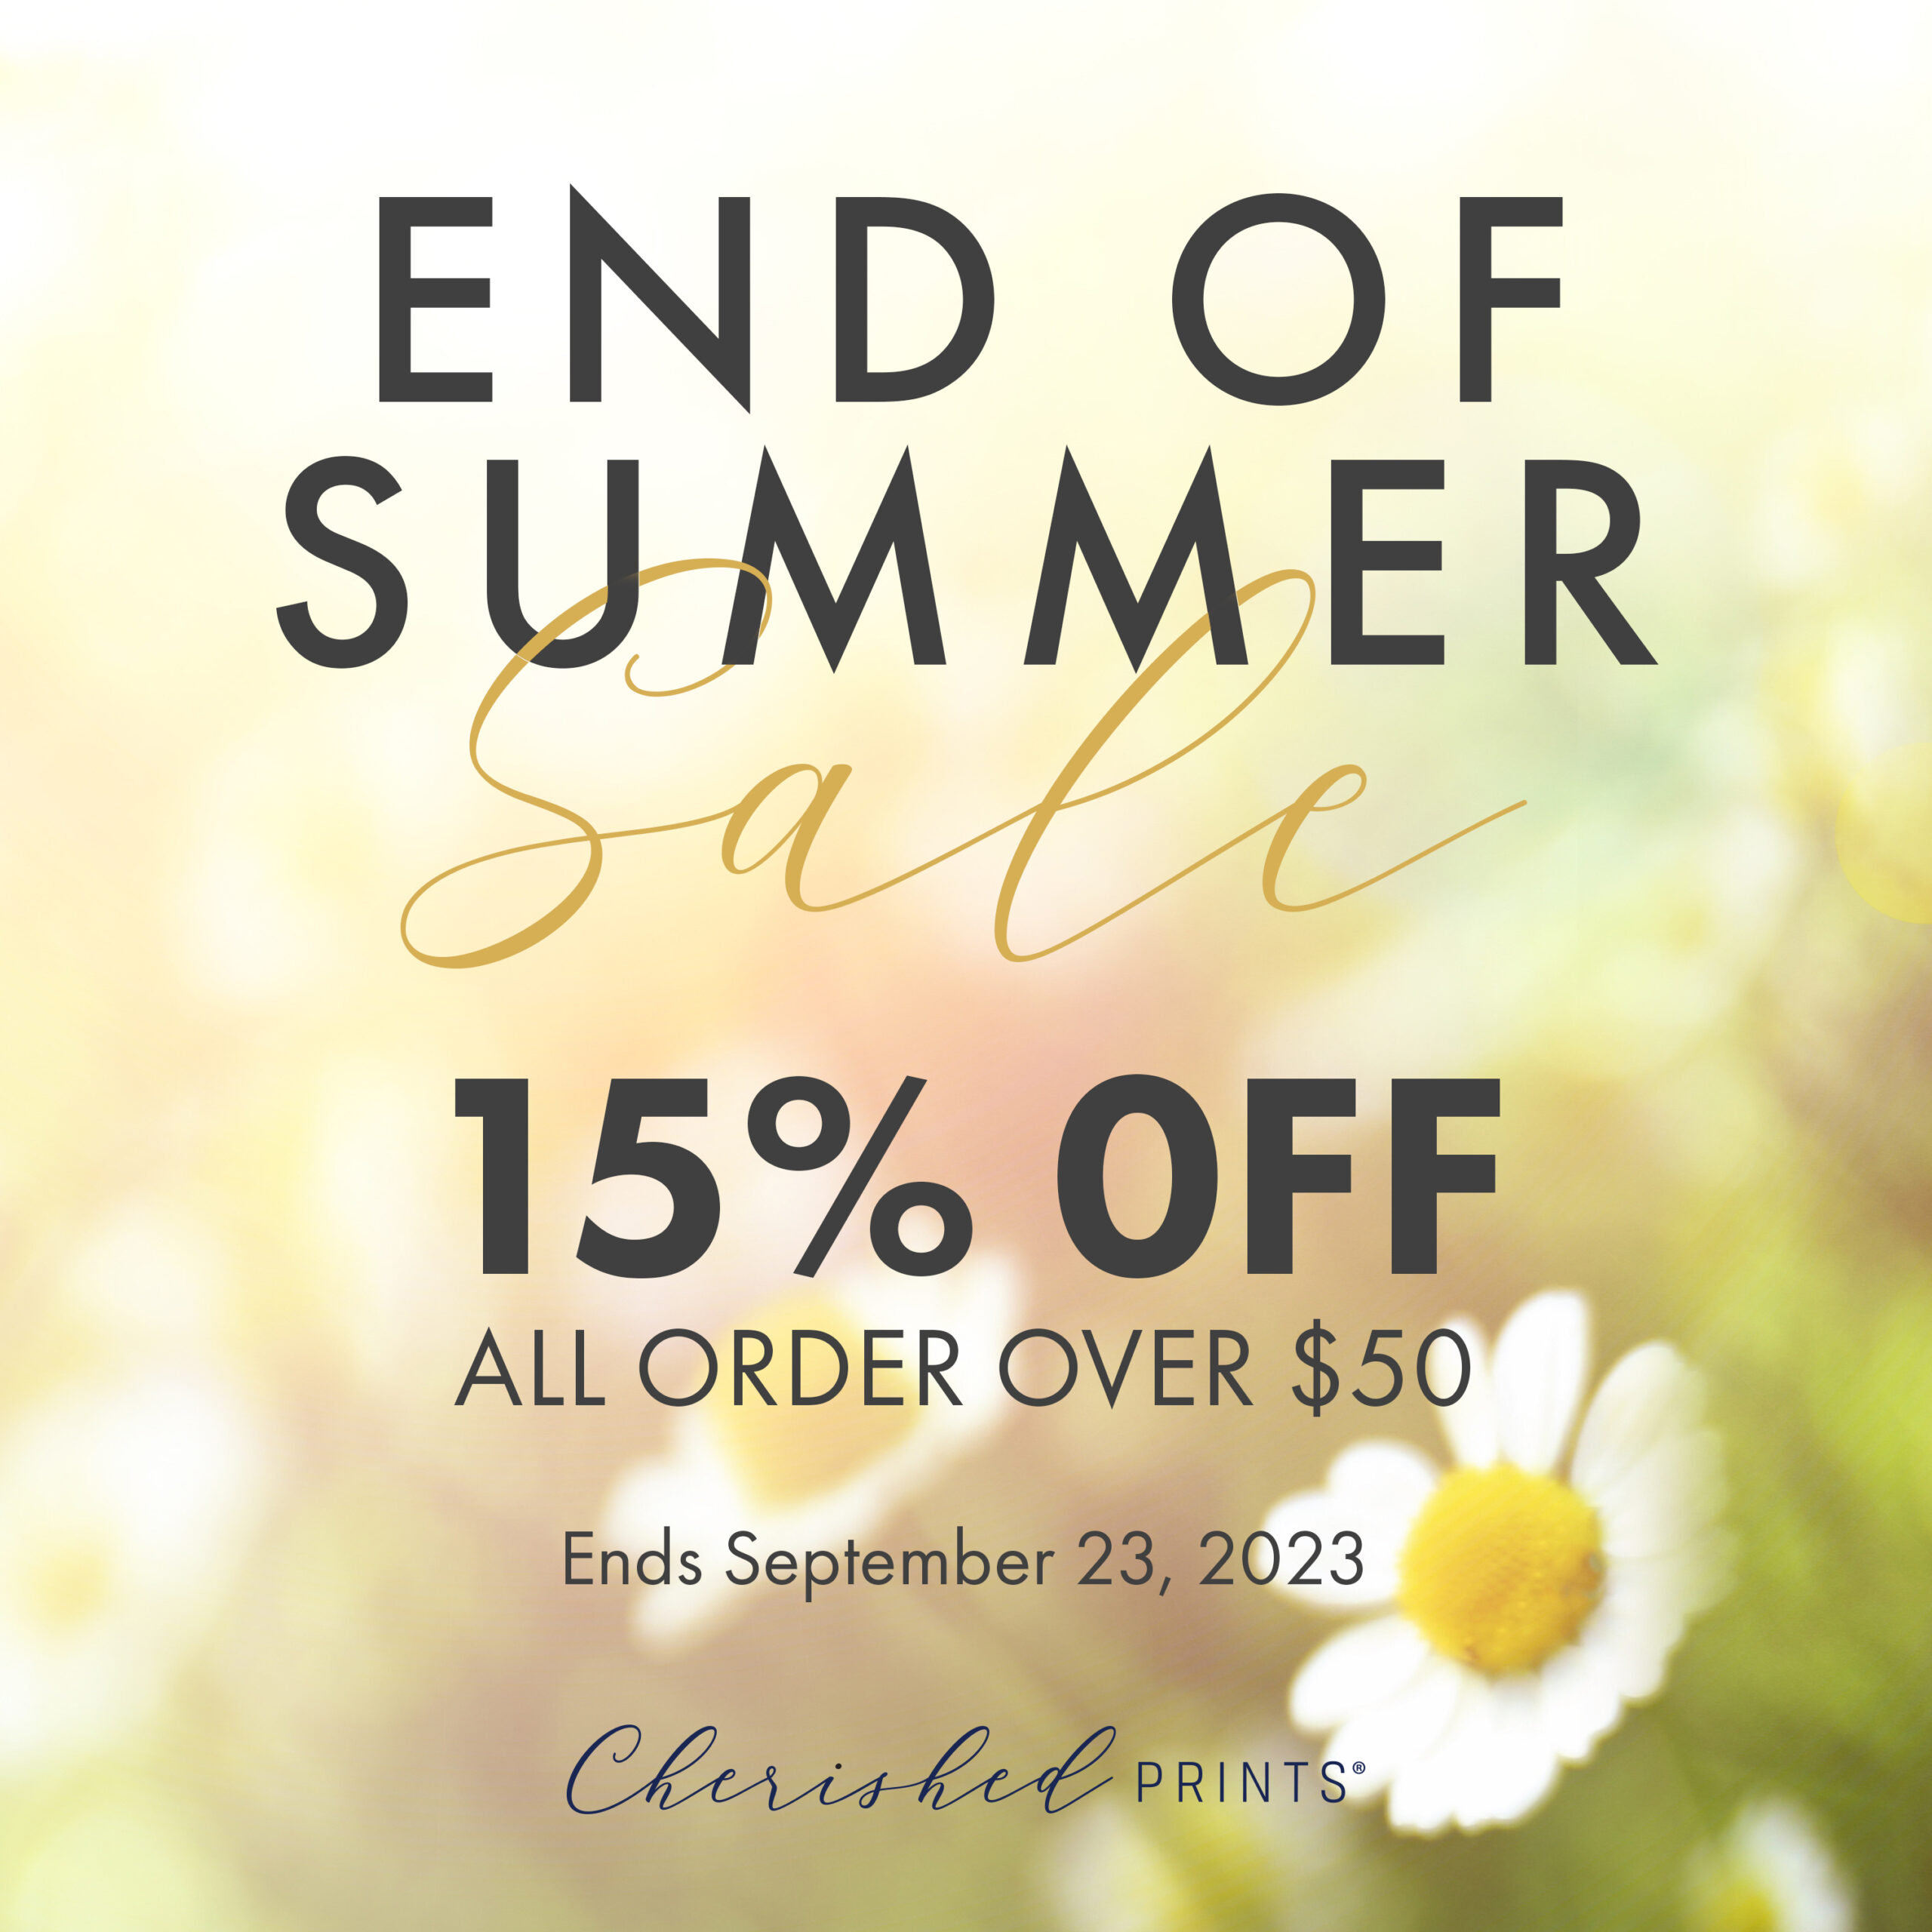 Cherished Prints Summer sale 15% off orders over $50